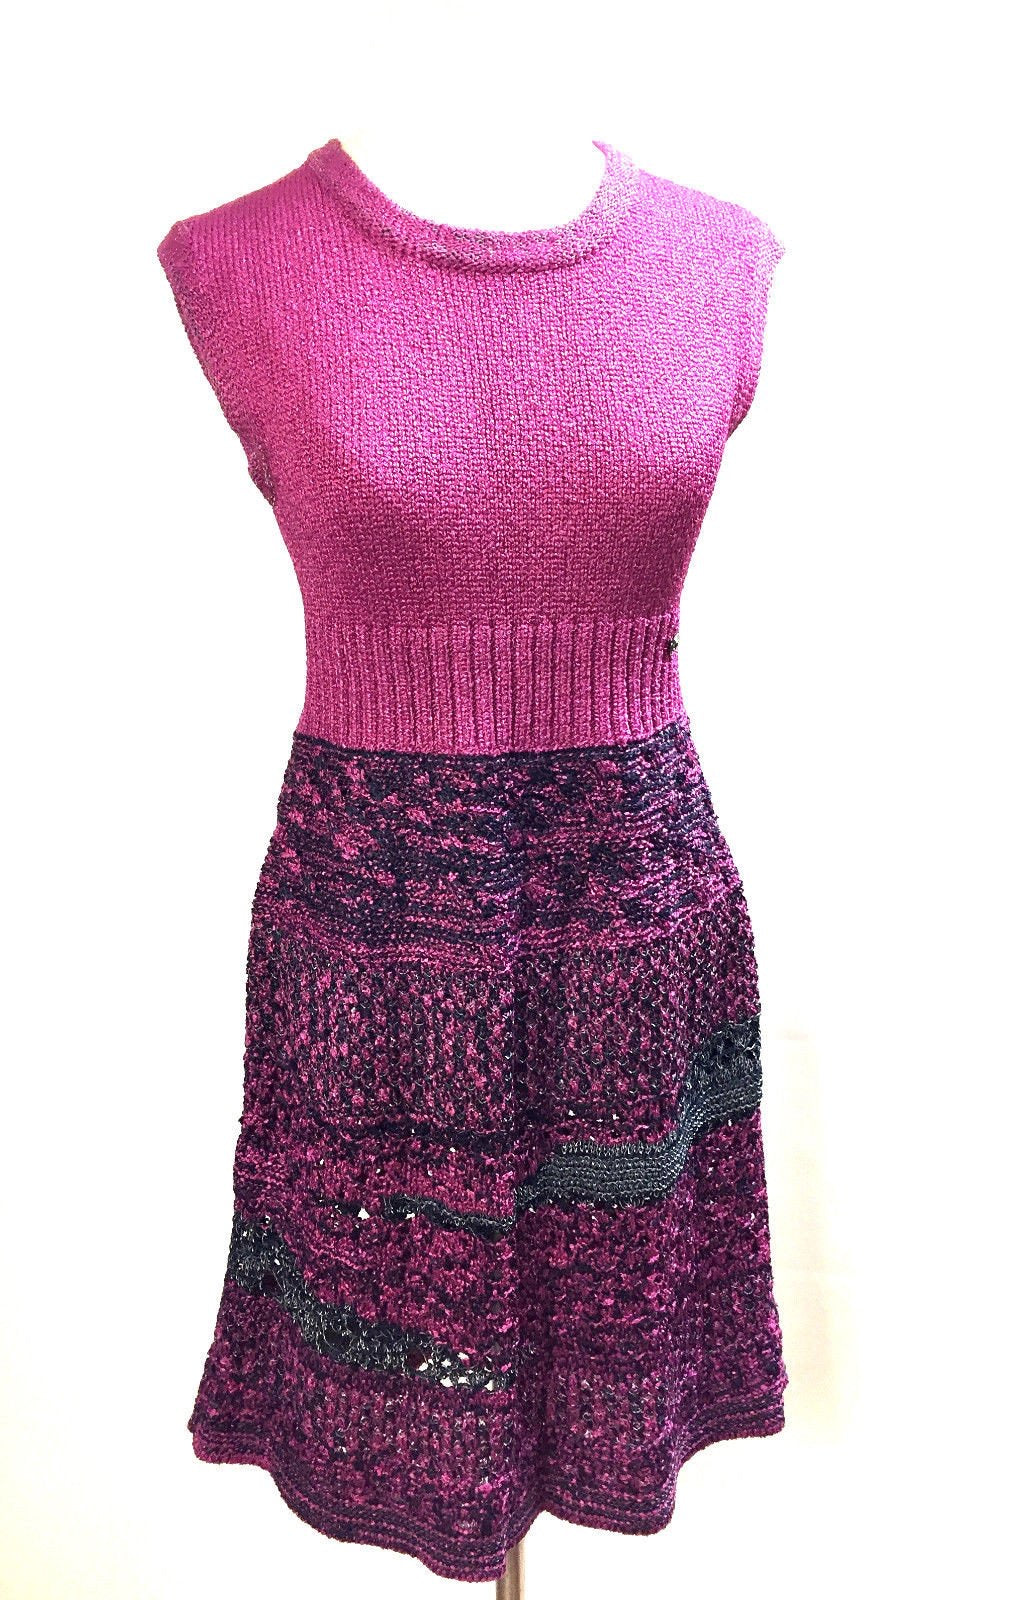 Chanel knit Pink raspberry navy blue gray Dress FR 42 US 6/8